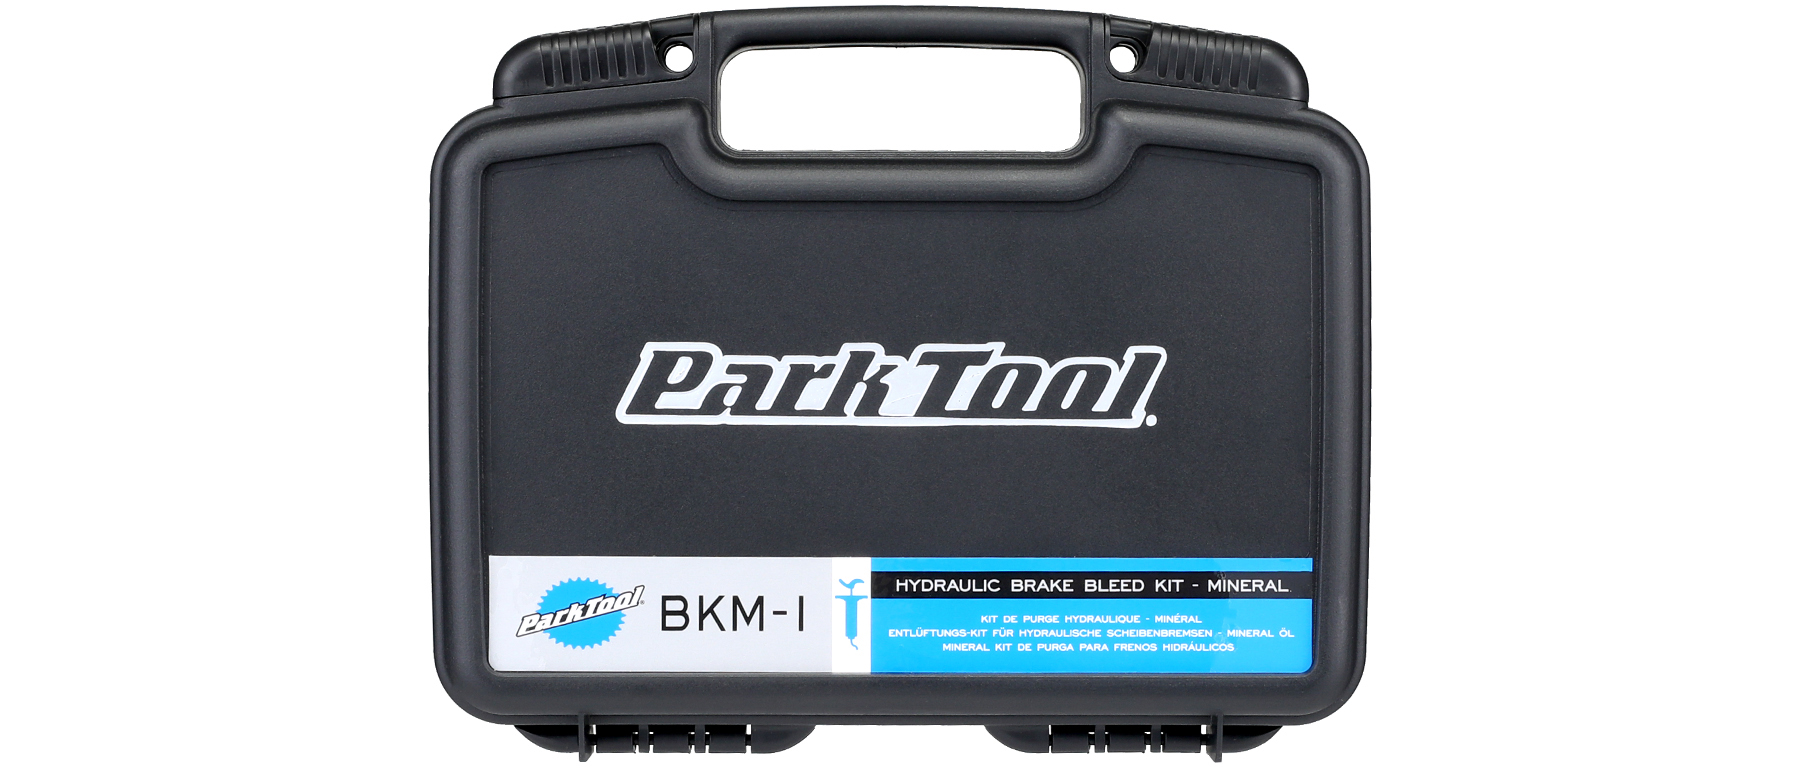 Park Tool BKM-1 Hydraulic Brake Bleed Kit- Mineral